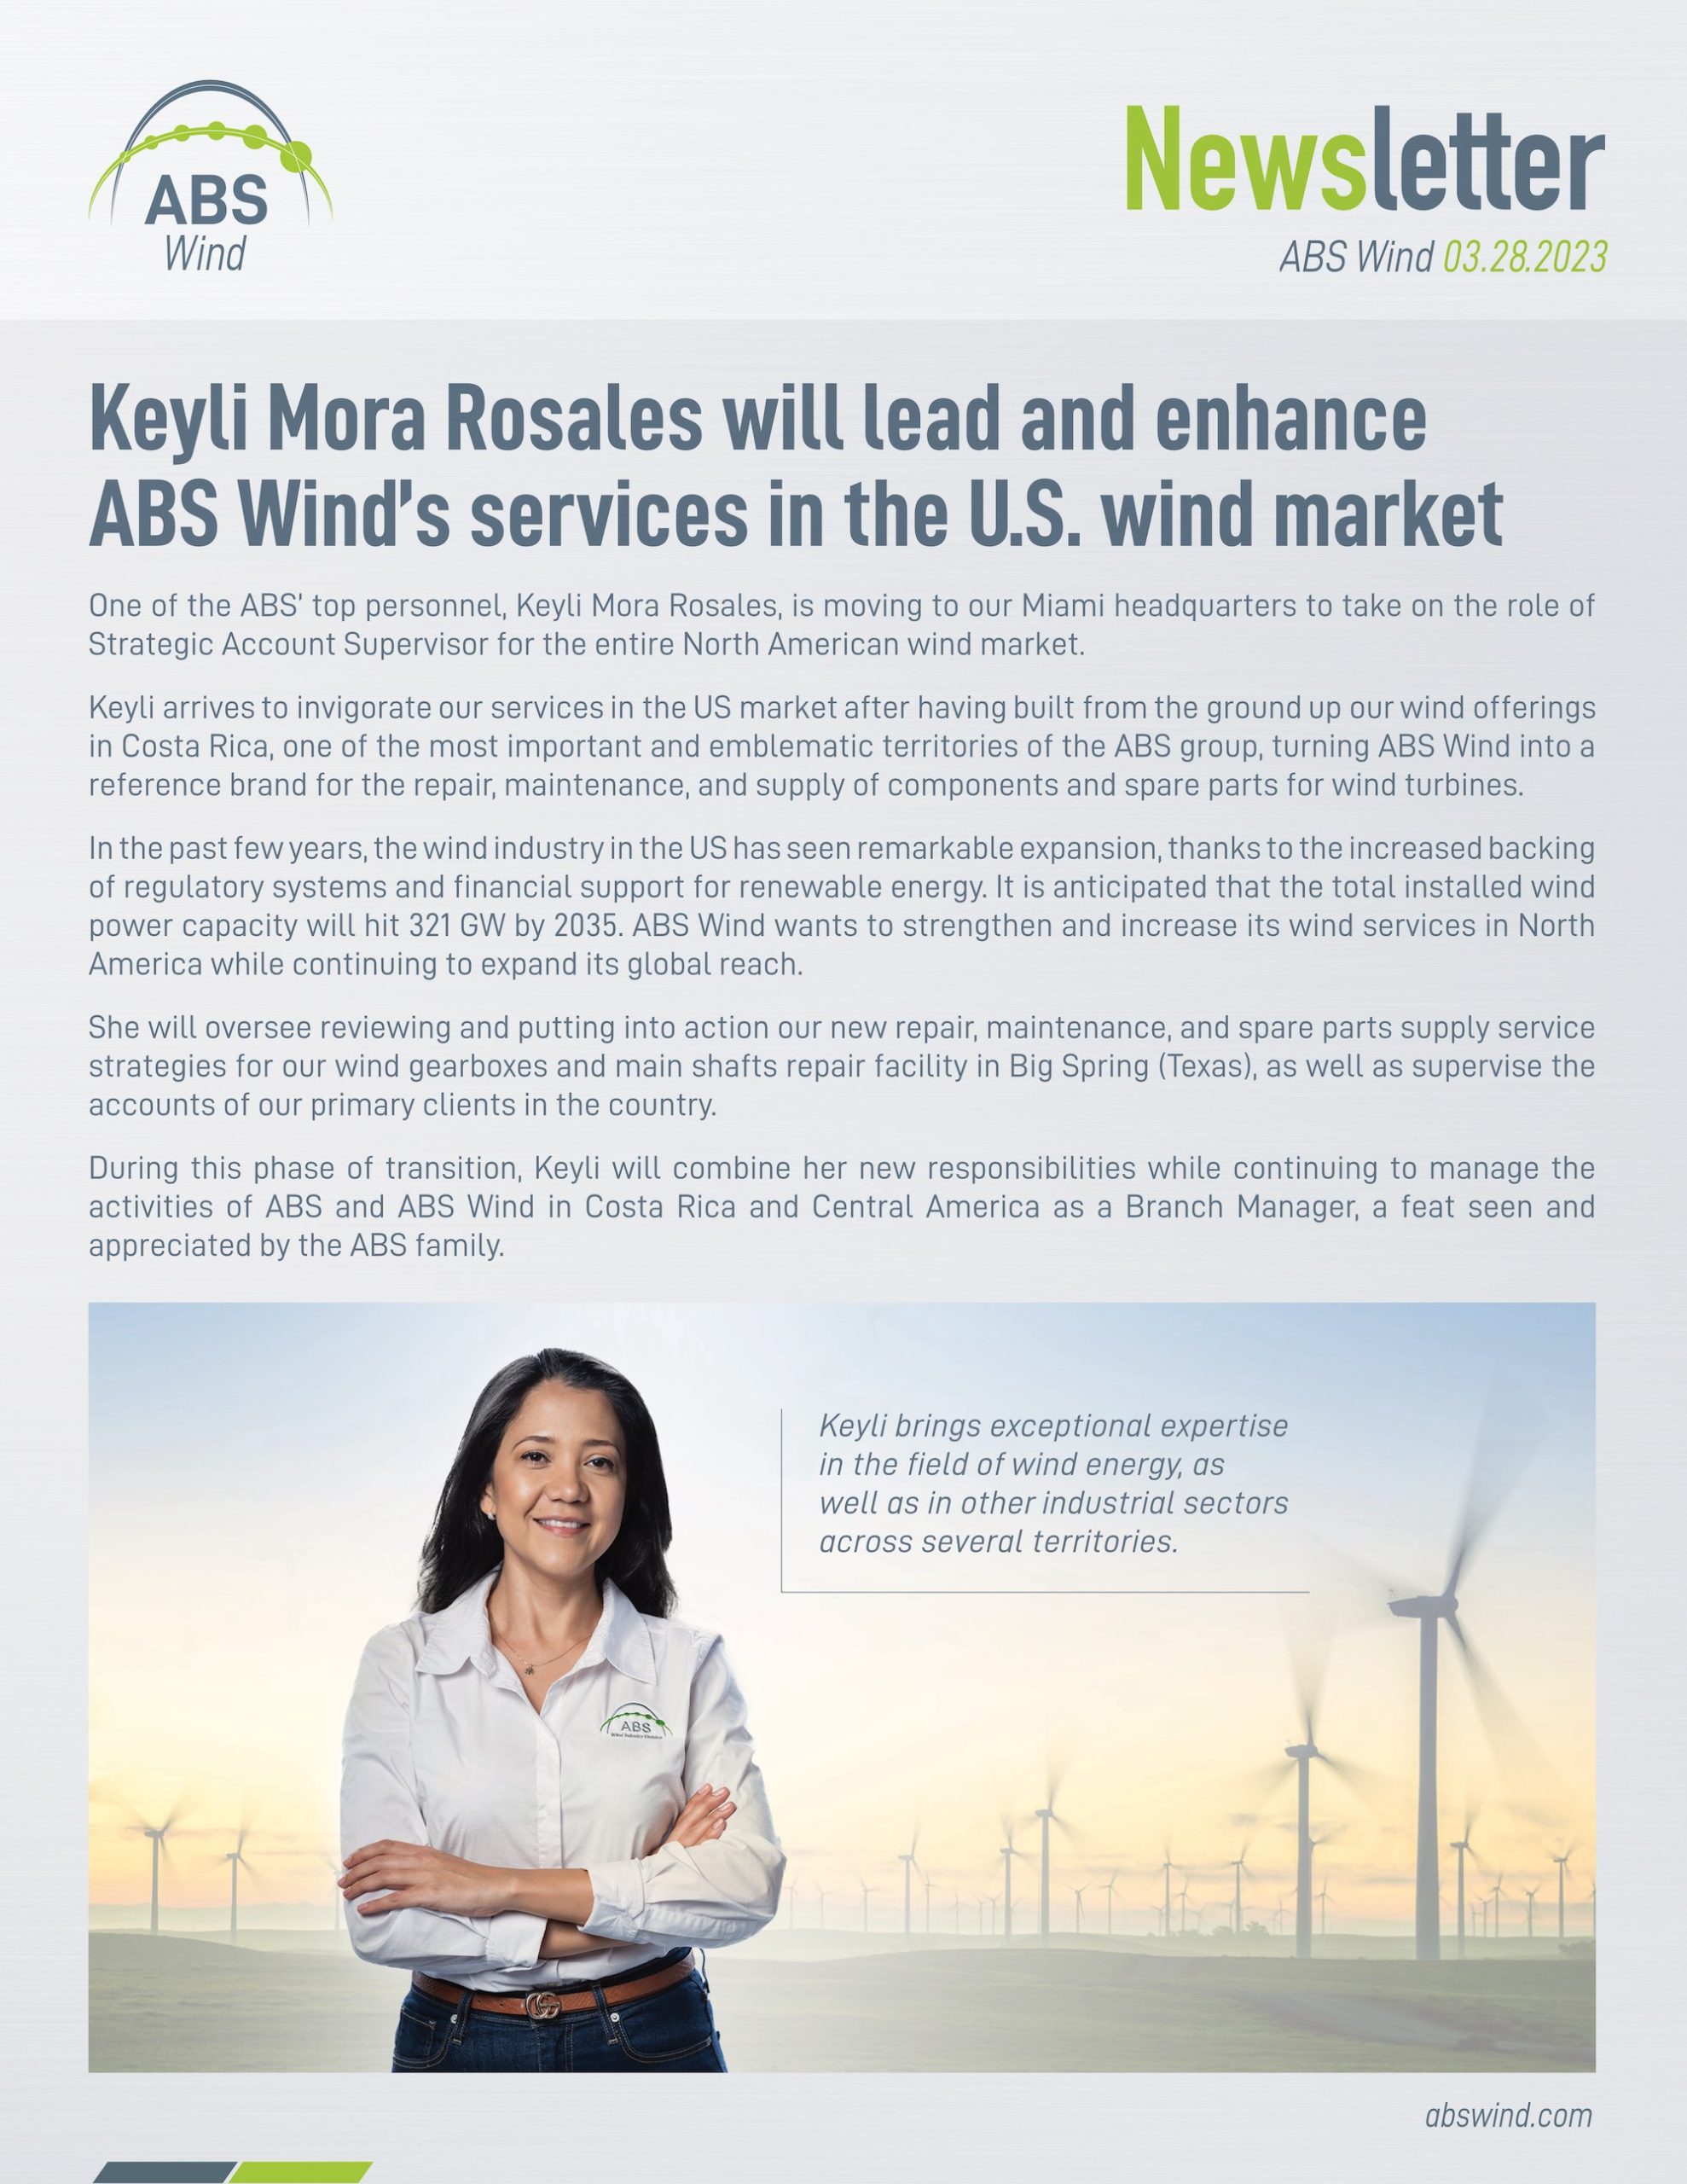 Keyli Mora Rosales will lead ABS Wind’s services in the U.S. wind market